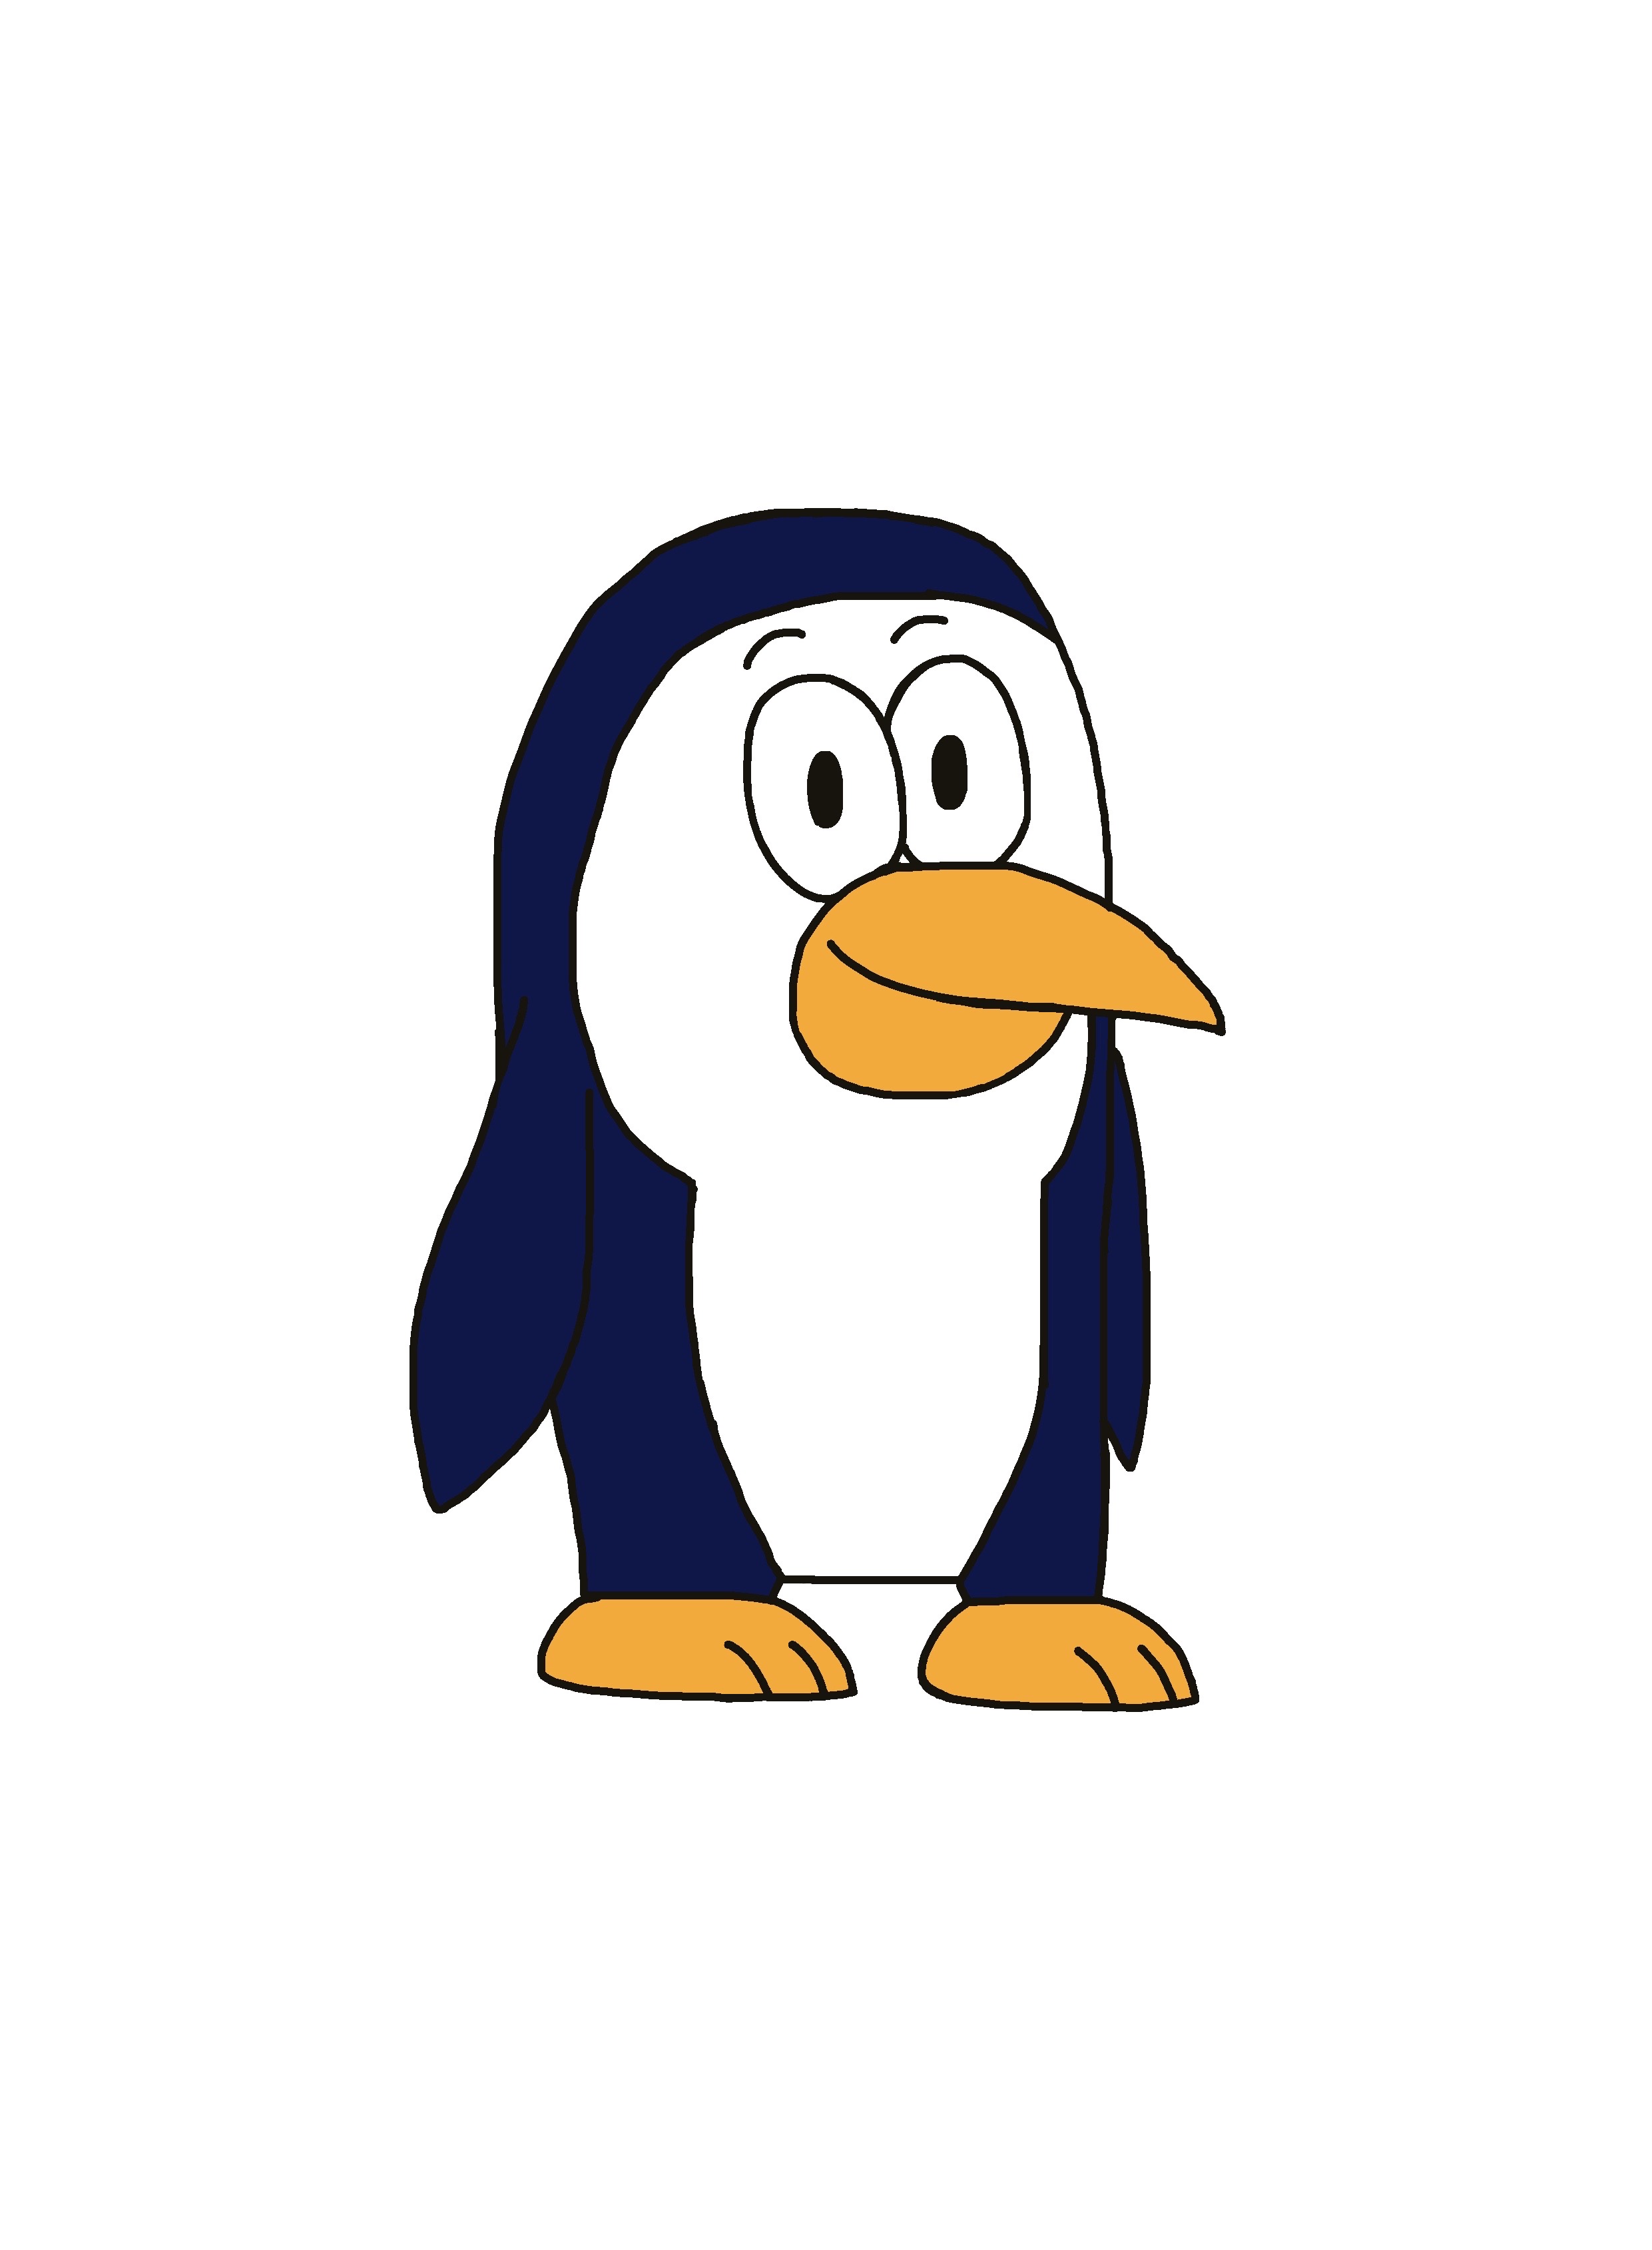 Pogo the Penguin by uDumbguy123 on DeviantArt